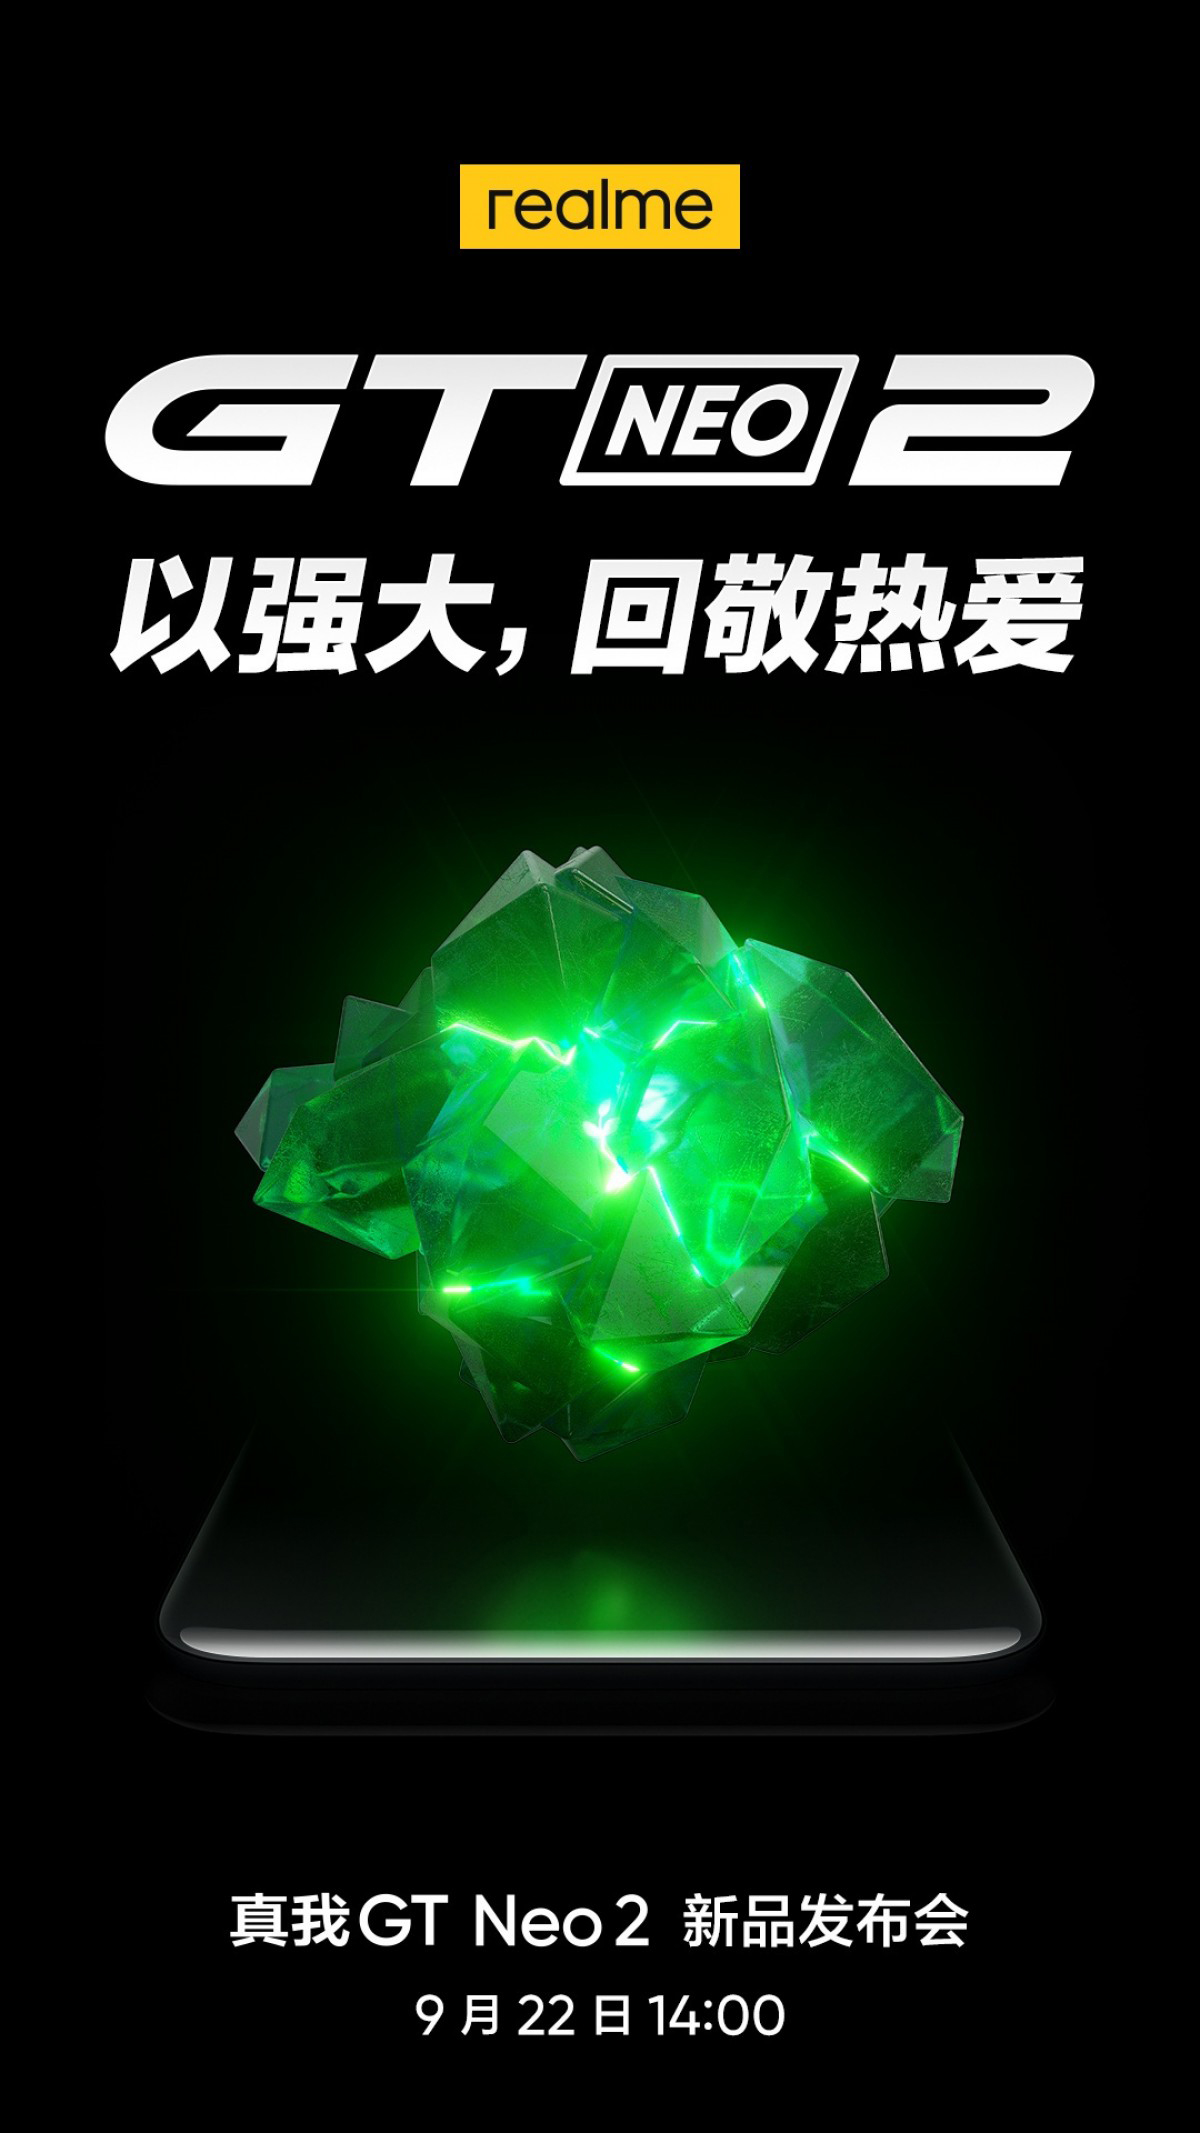 realme GT Neo2将于9月22日在中国发布